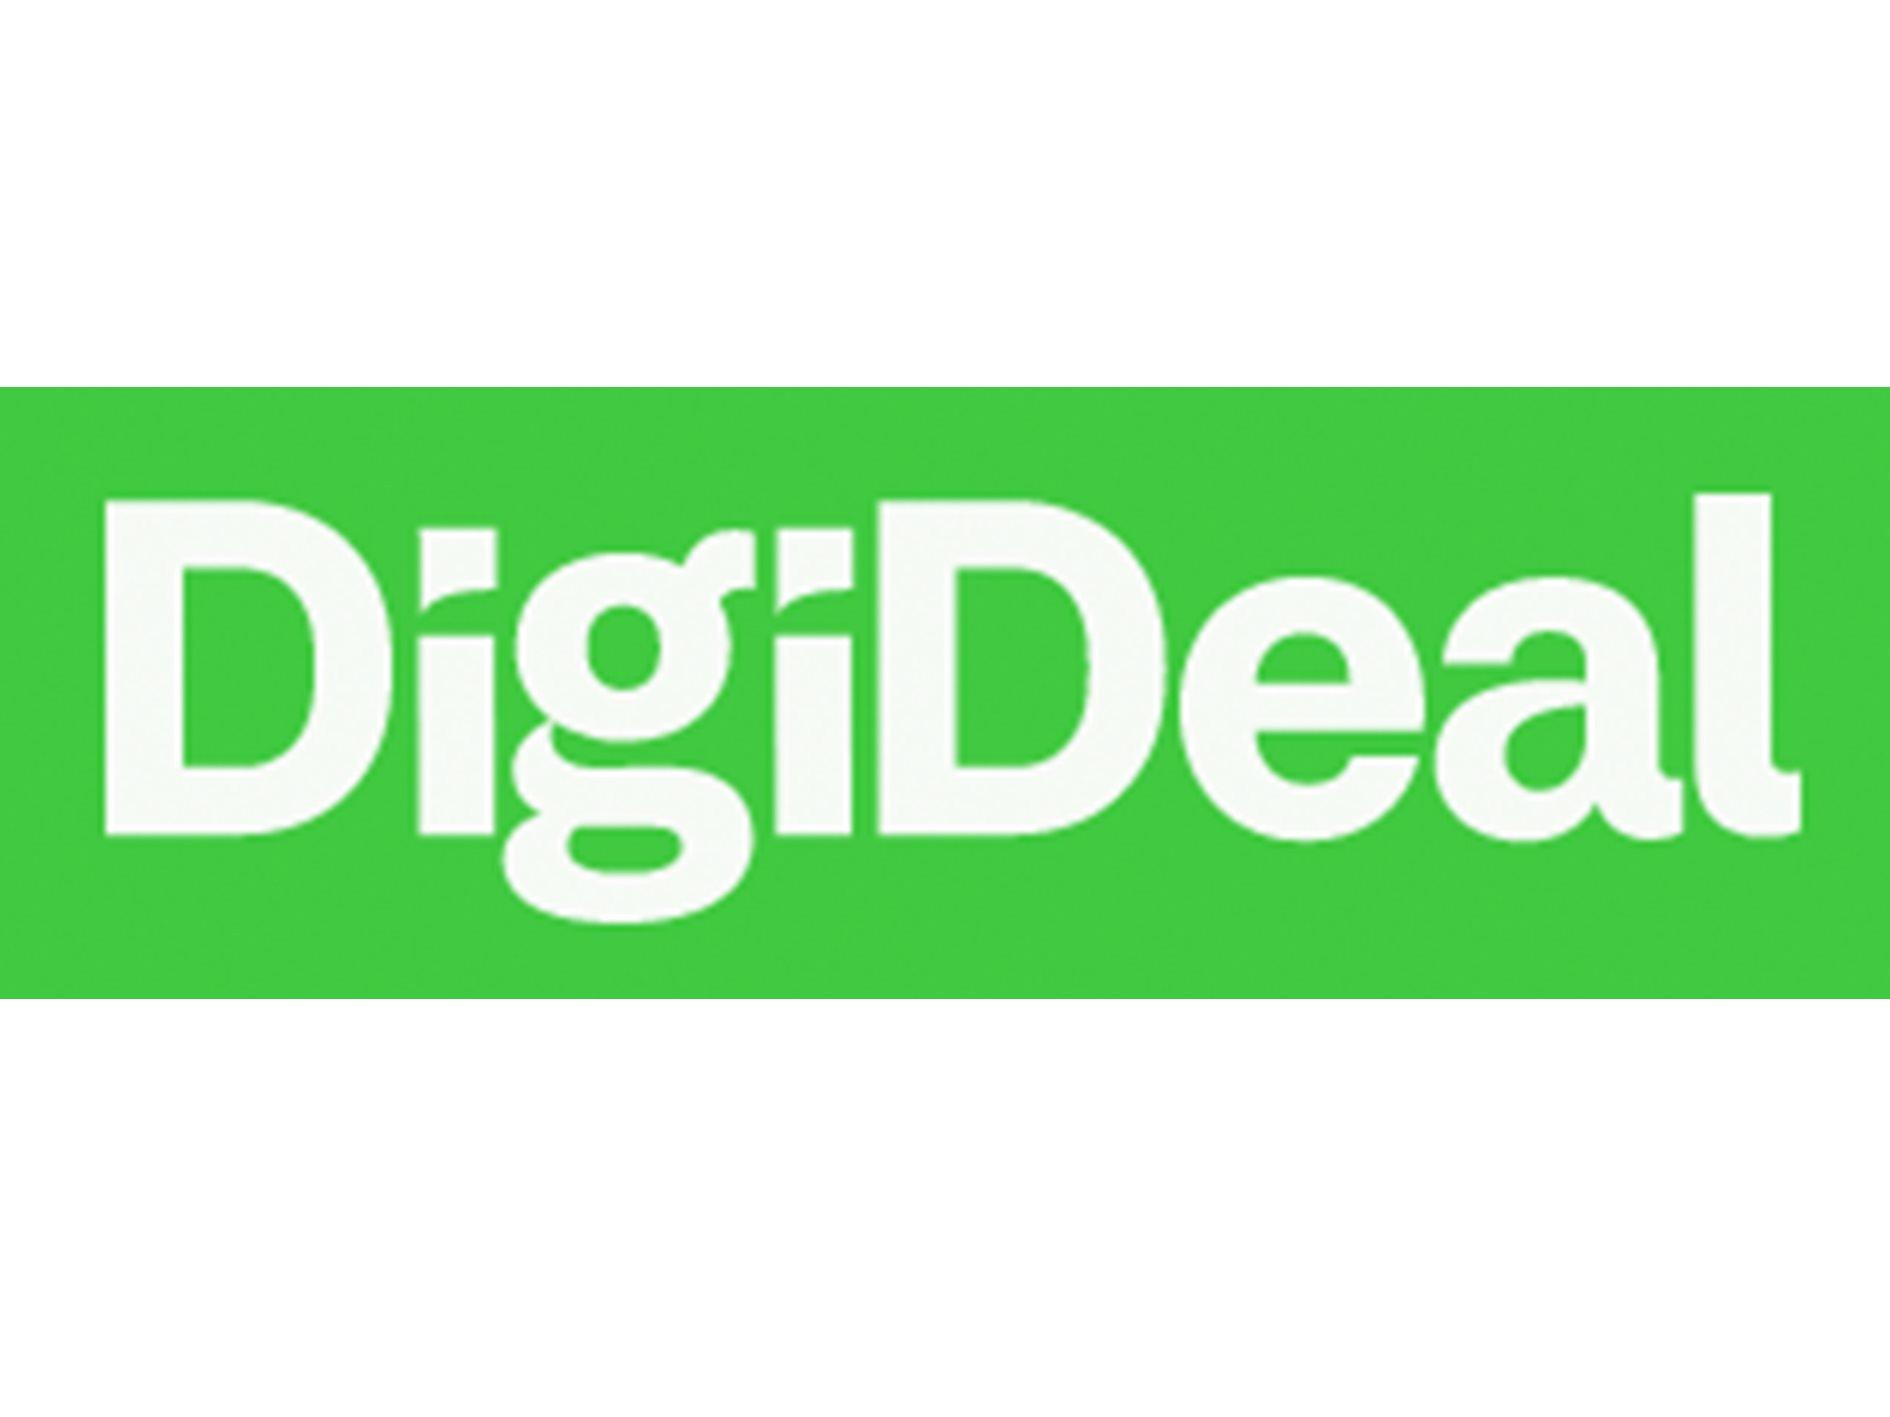 Logo of Digideal